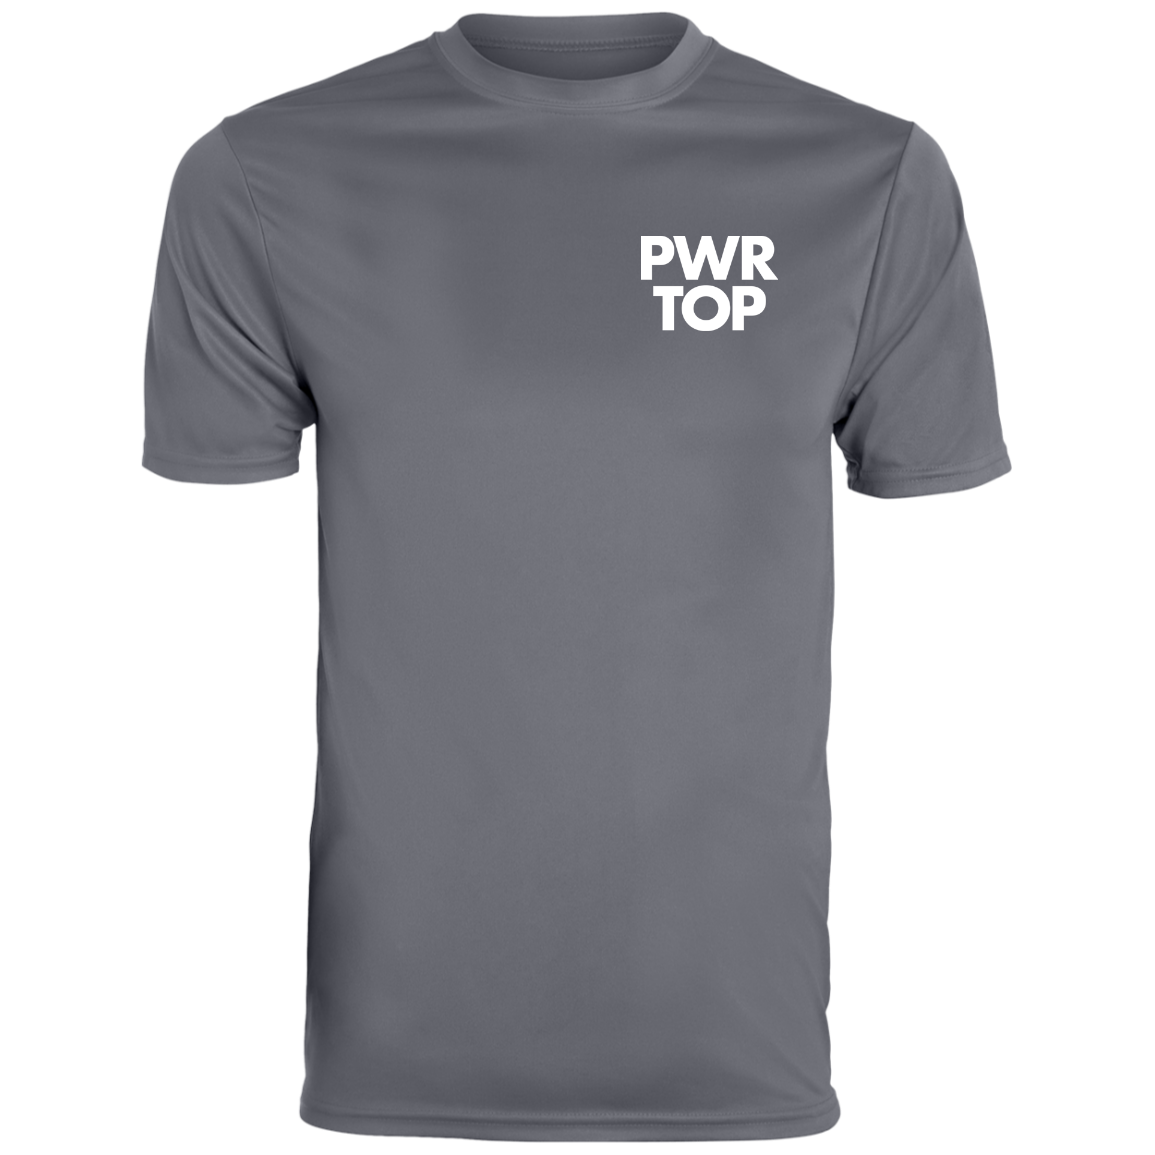 Hustler PWR TOP Performance T-Shirt